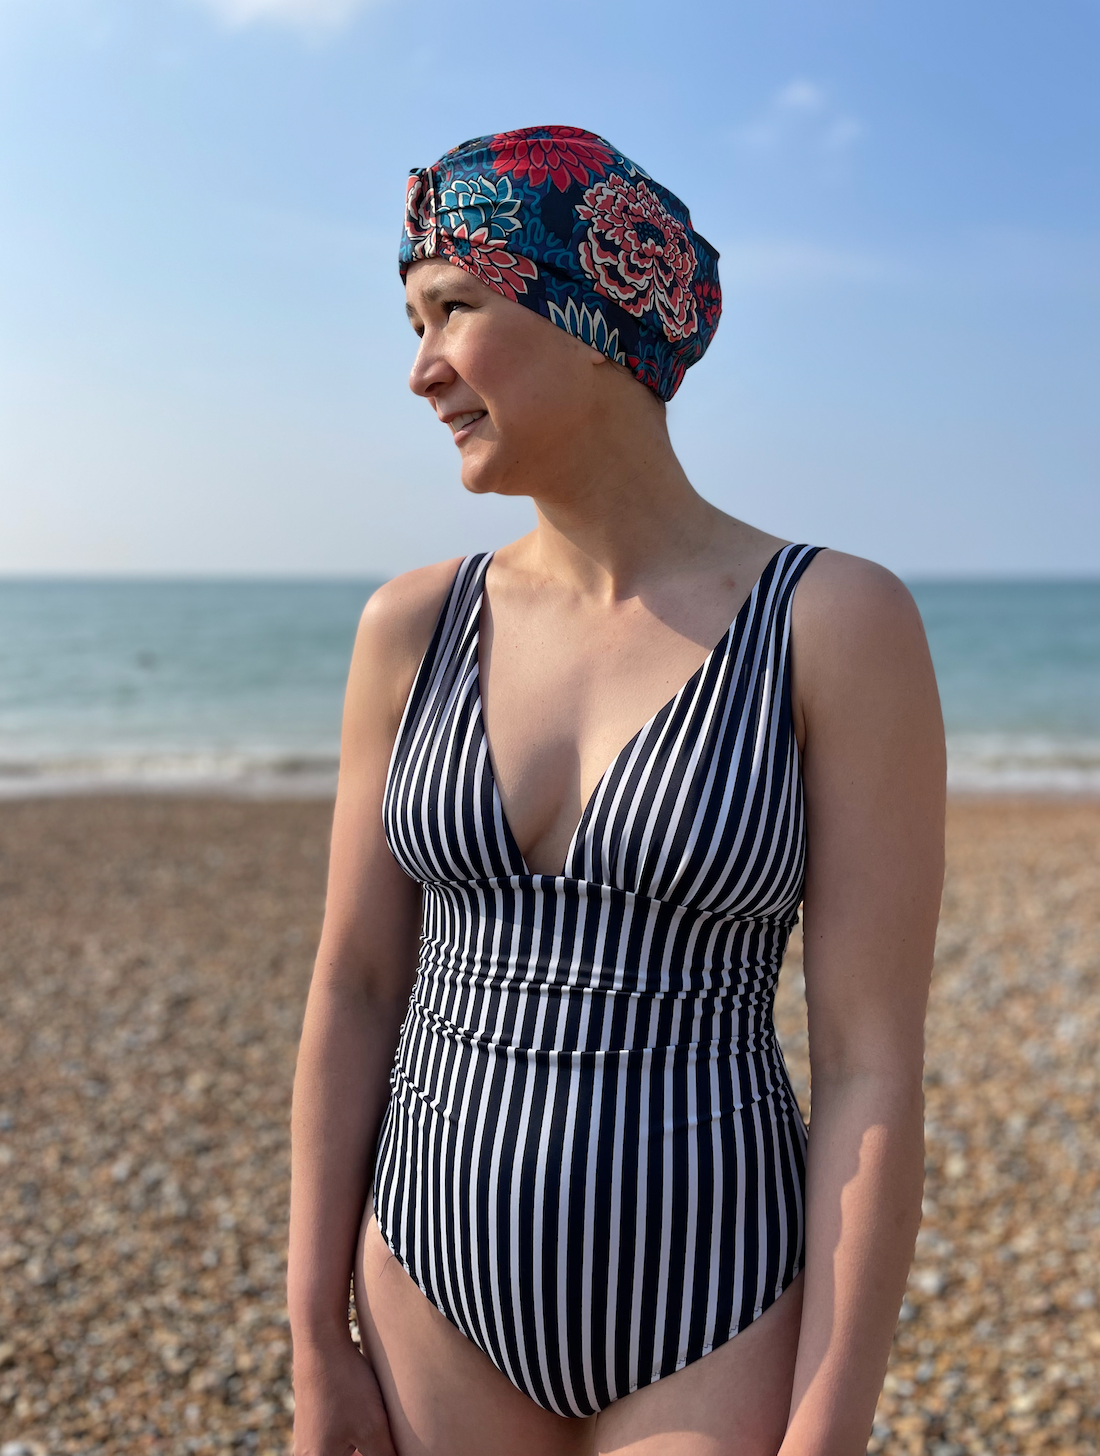 Salty Sea Knot - Swimming Cap Topper - Swim Turban - Vintage Meandering